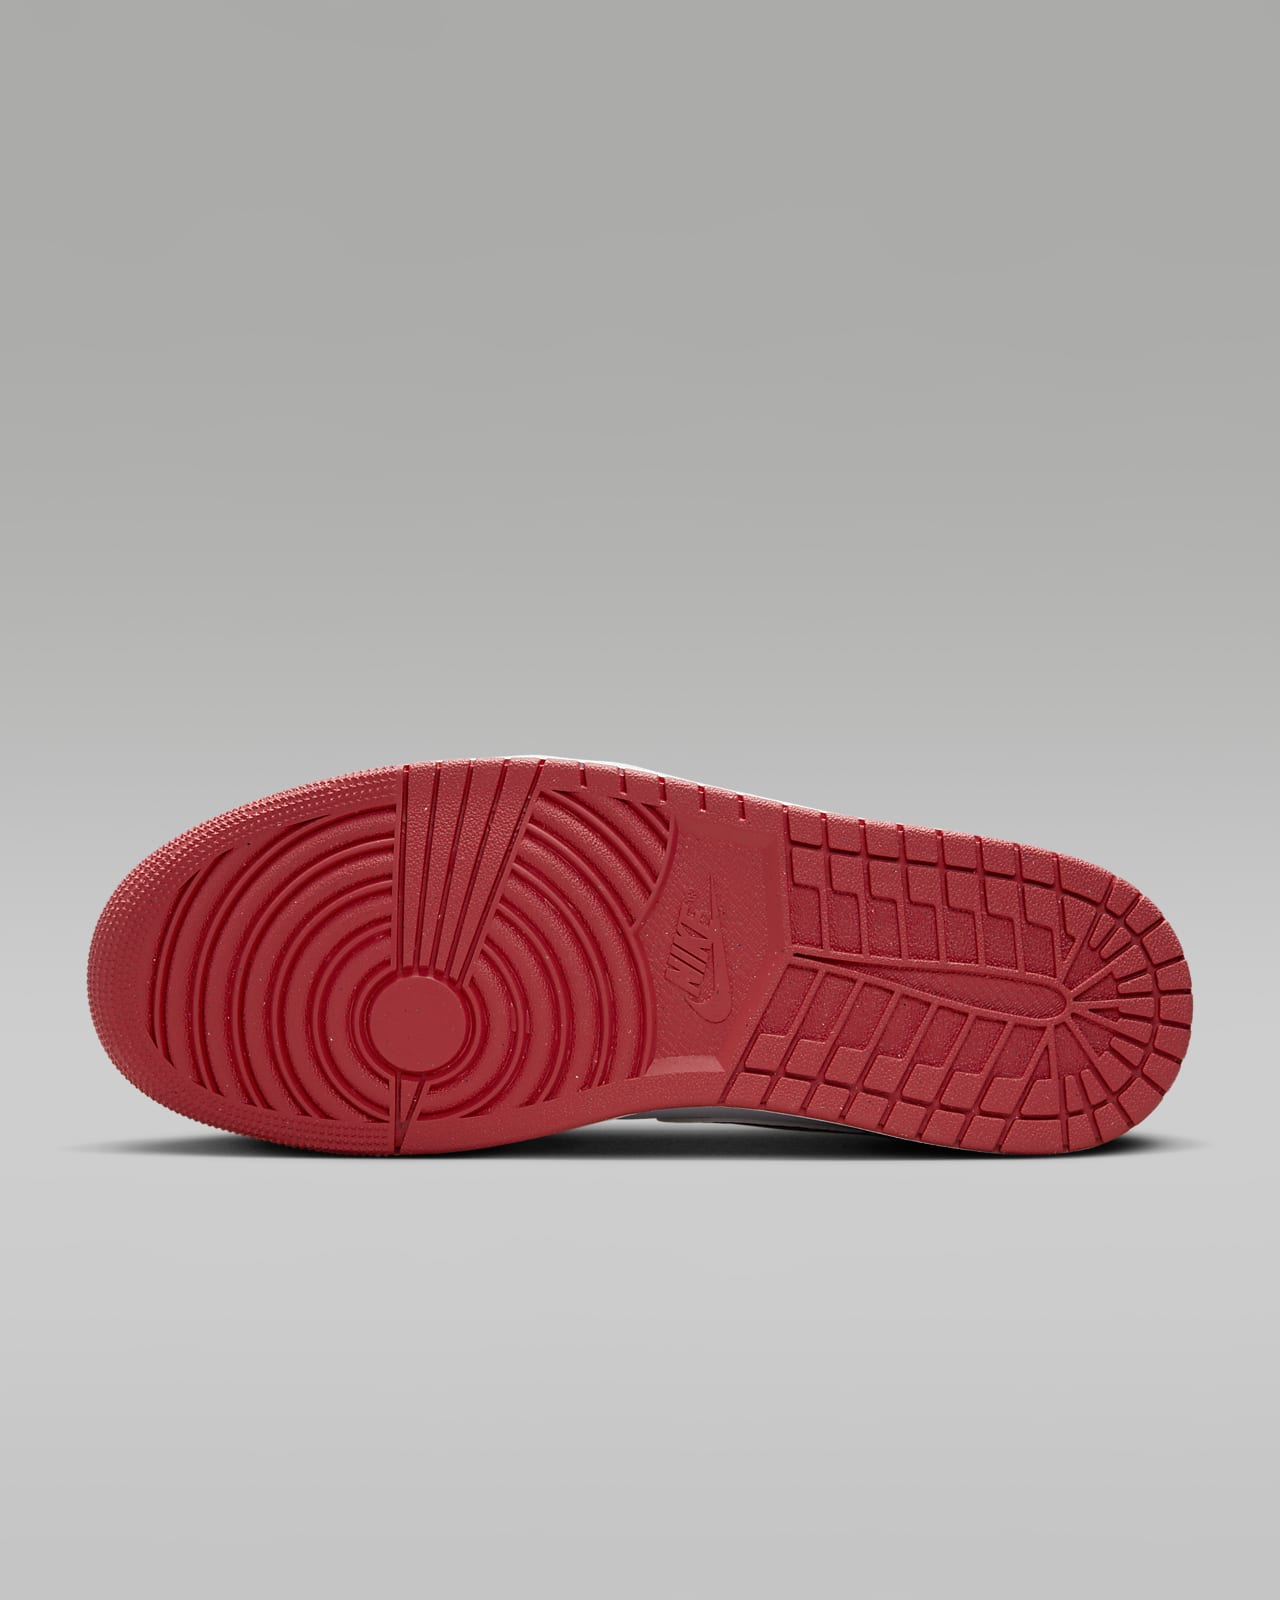 Air Jordan 1 Low SE Men's Shoes